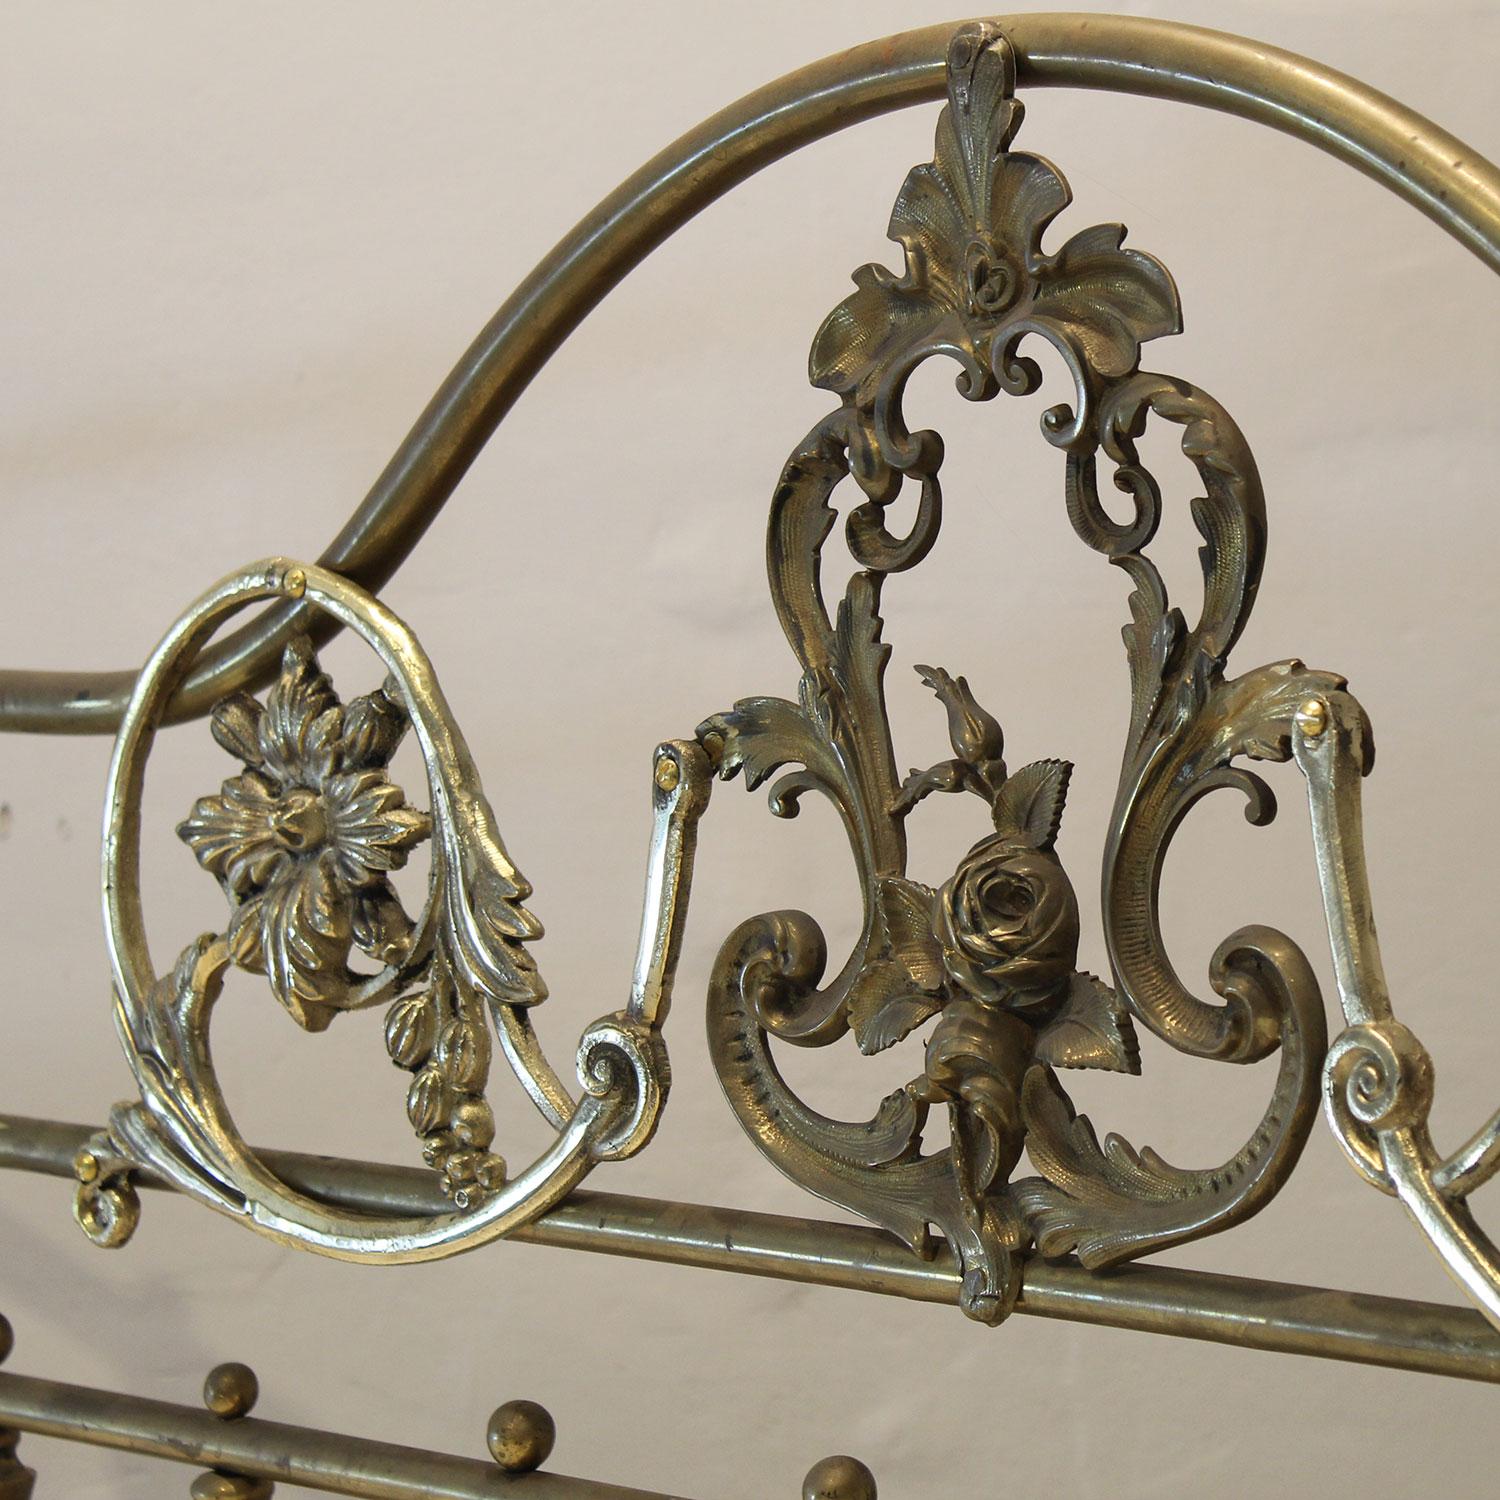 All Brass Antique Platform Bed MK268 1